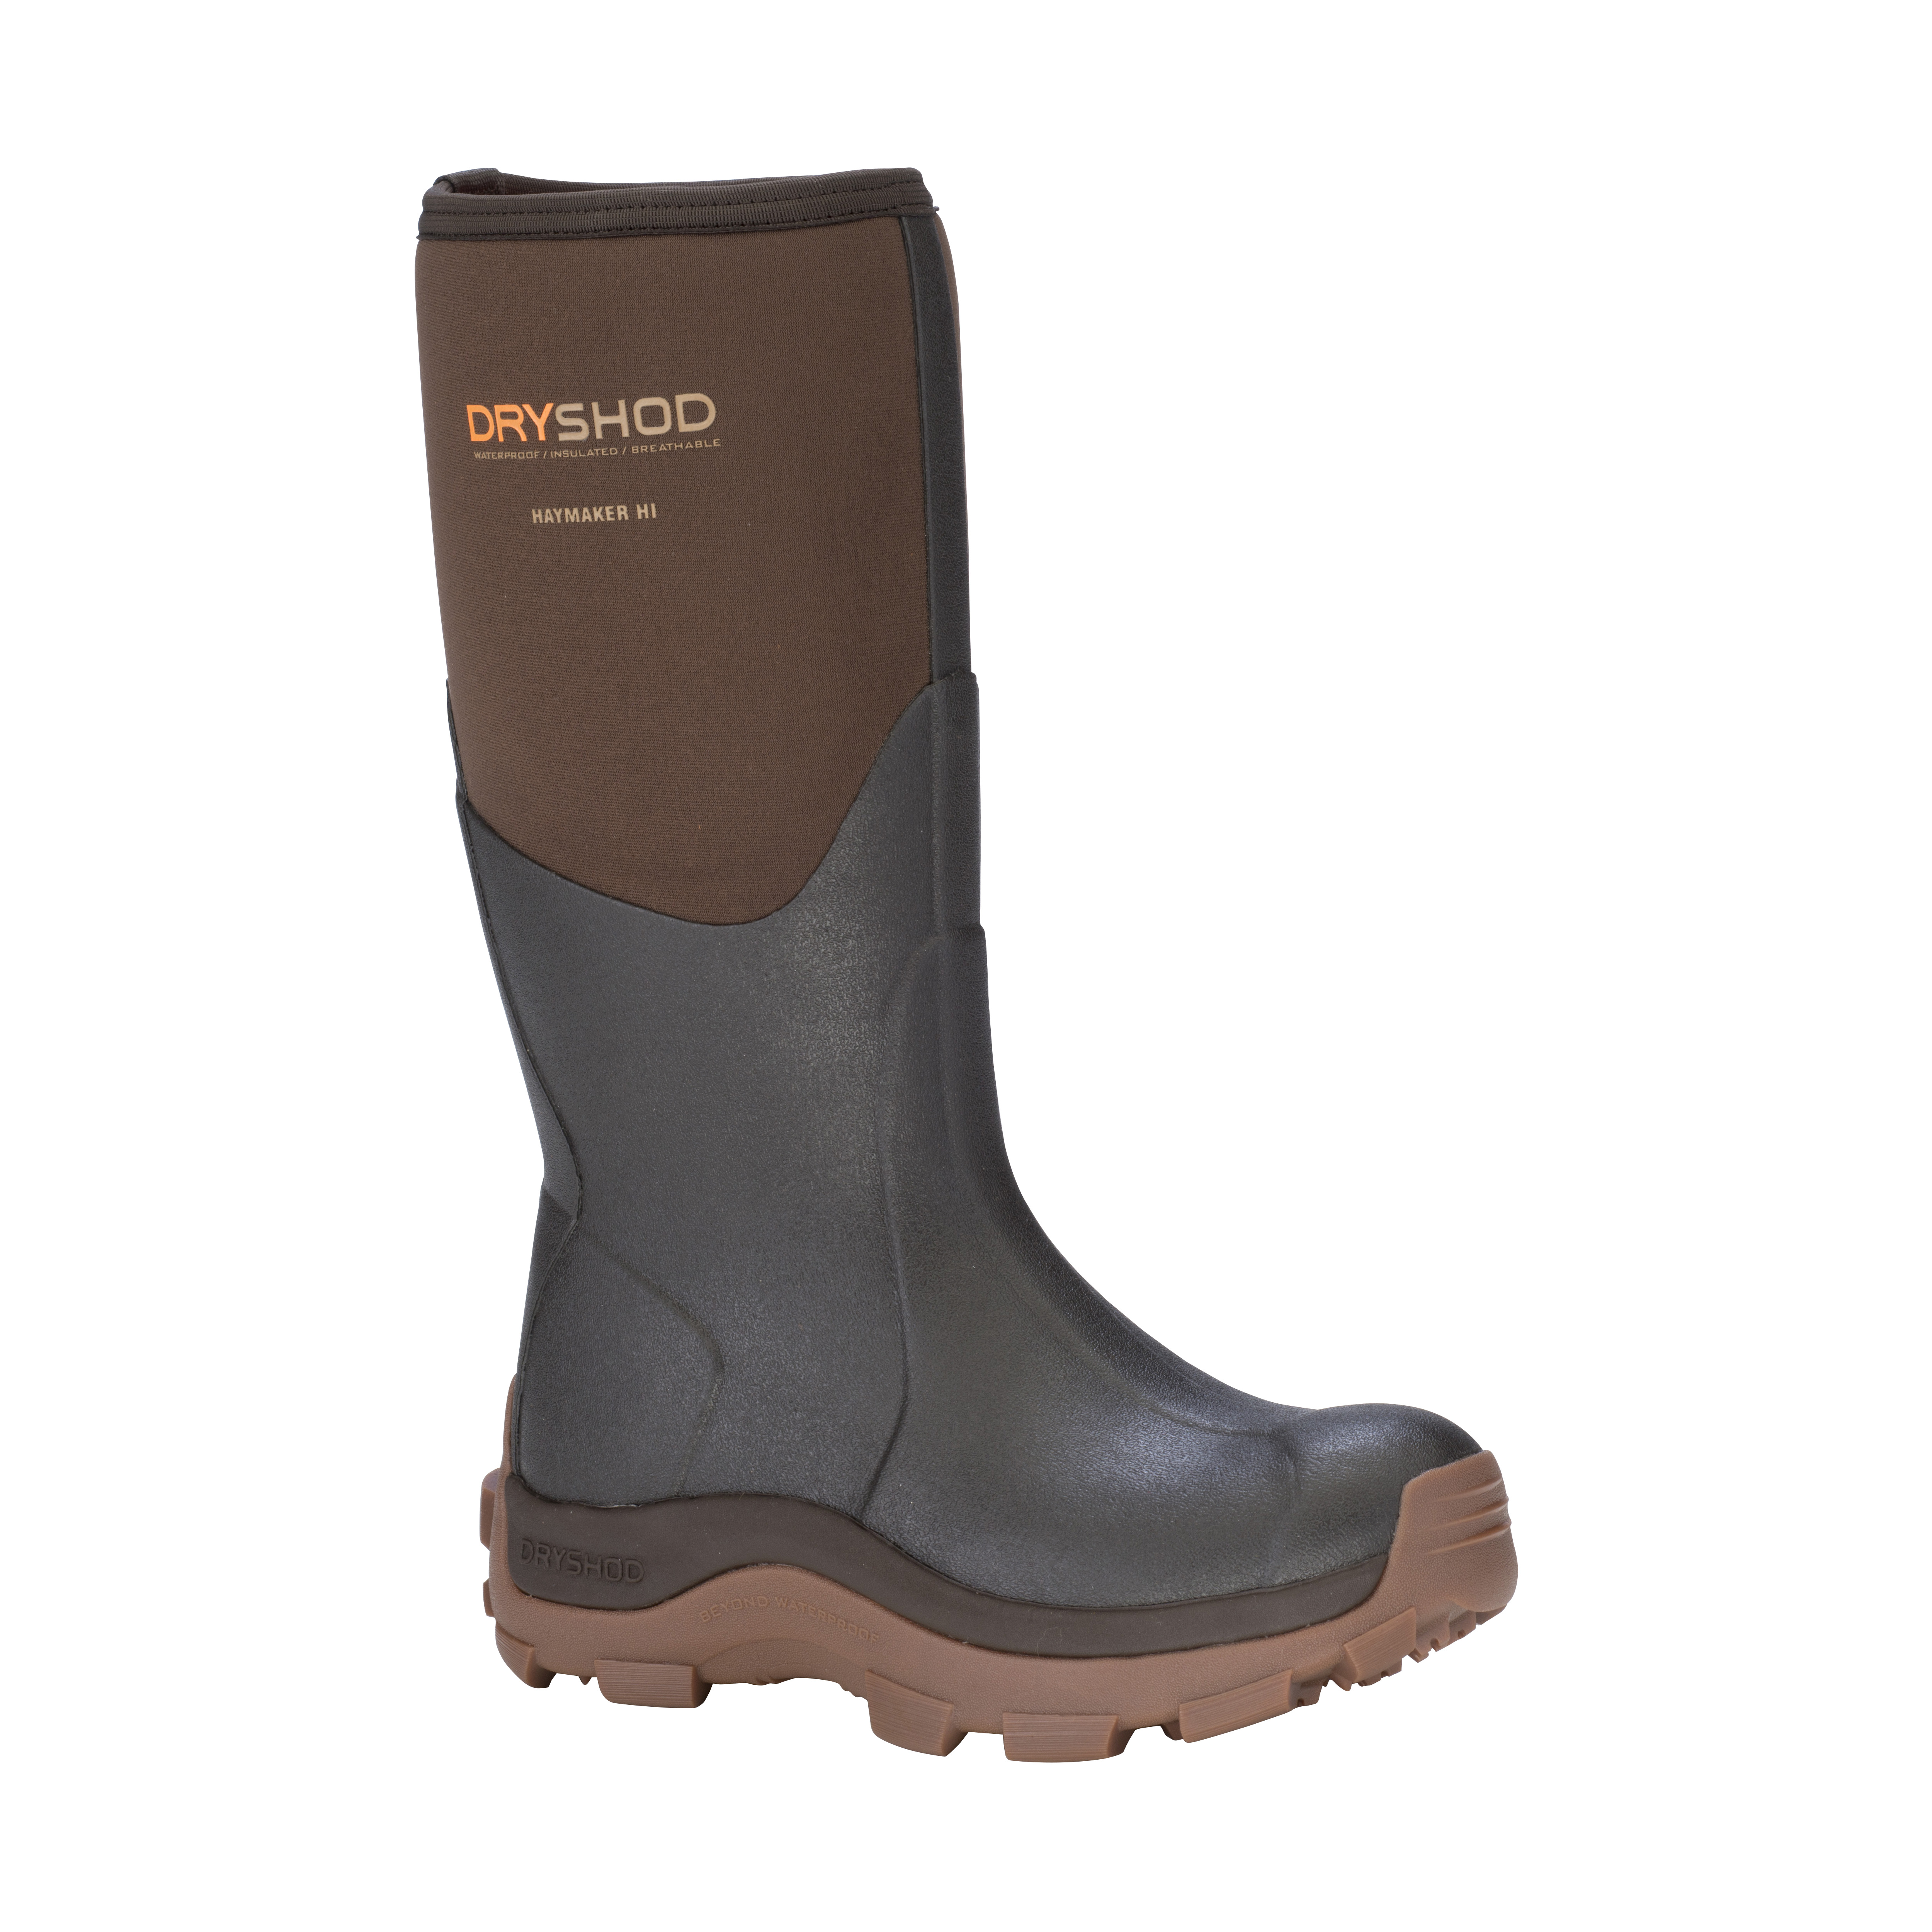 waterproof ranch boots